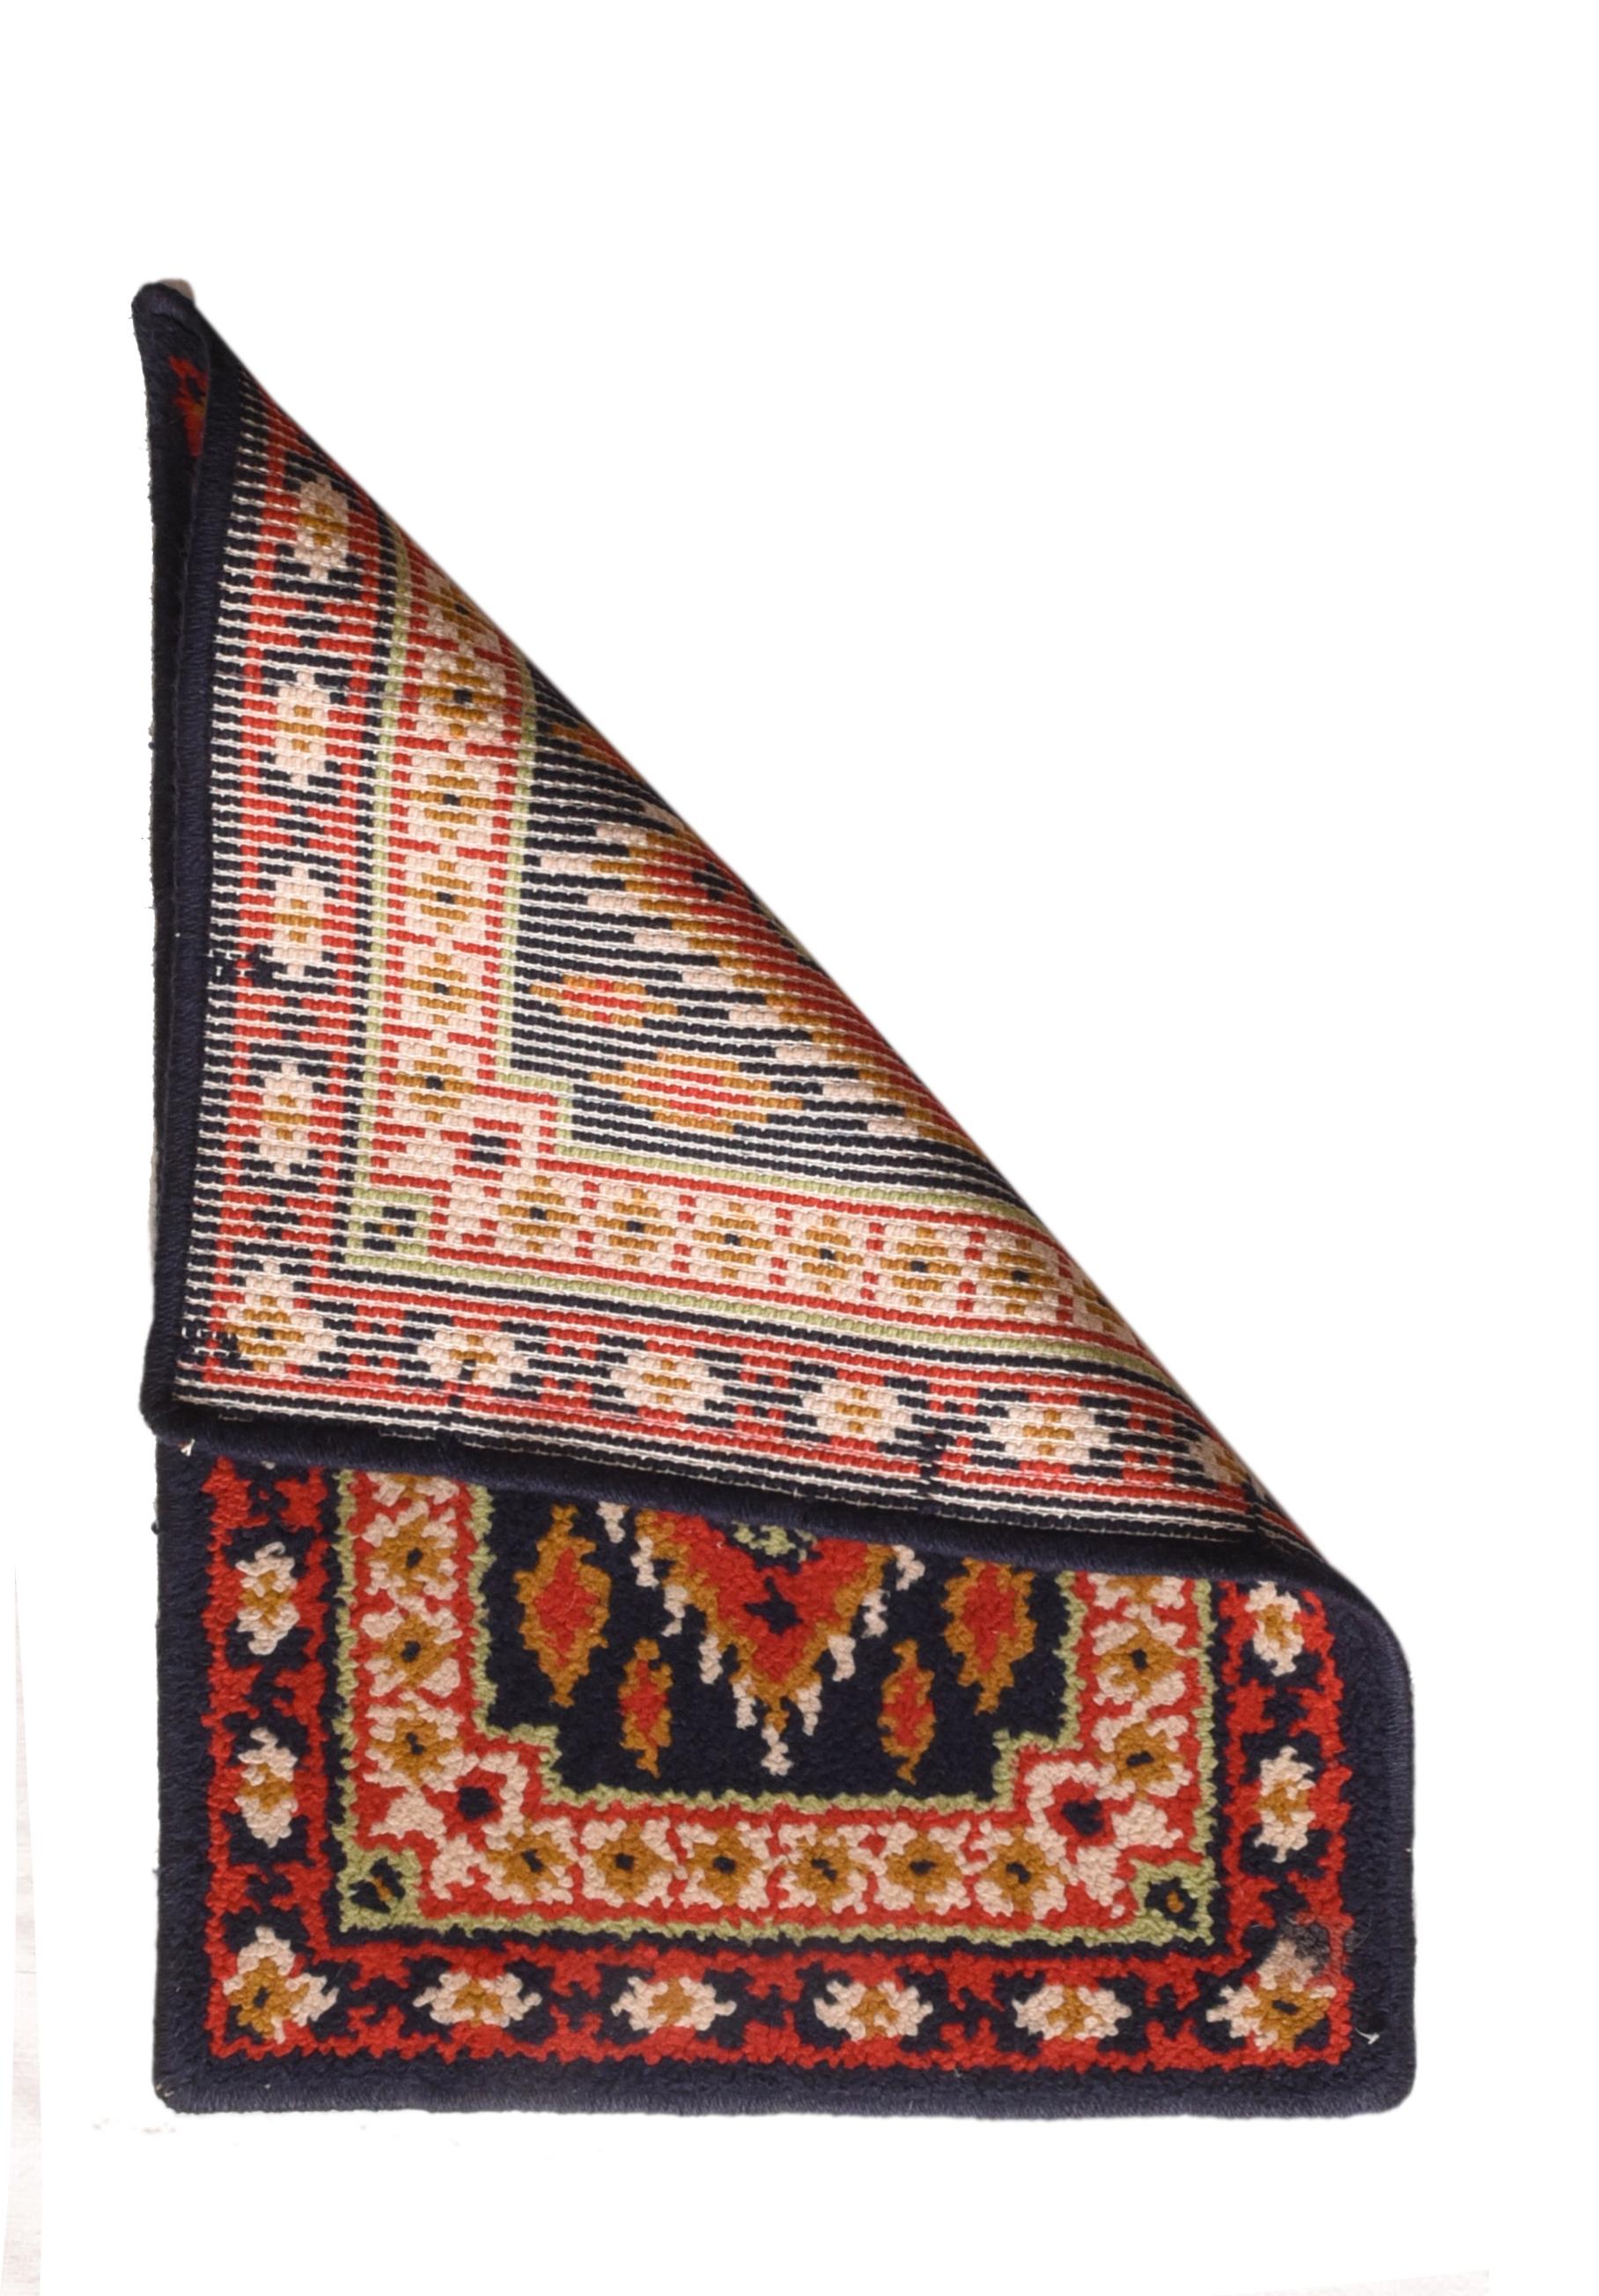 Vintage European rug 2' x 3'.